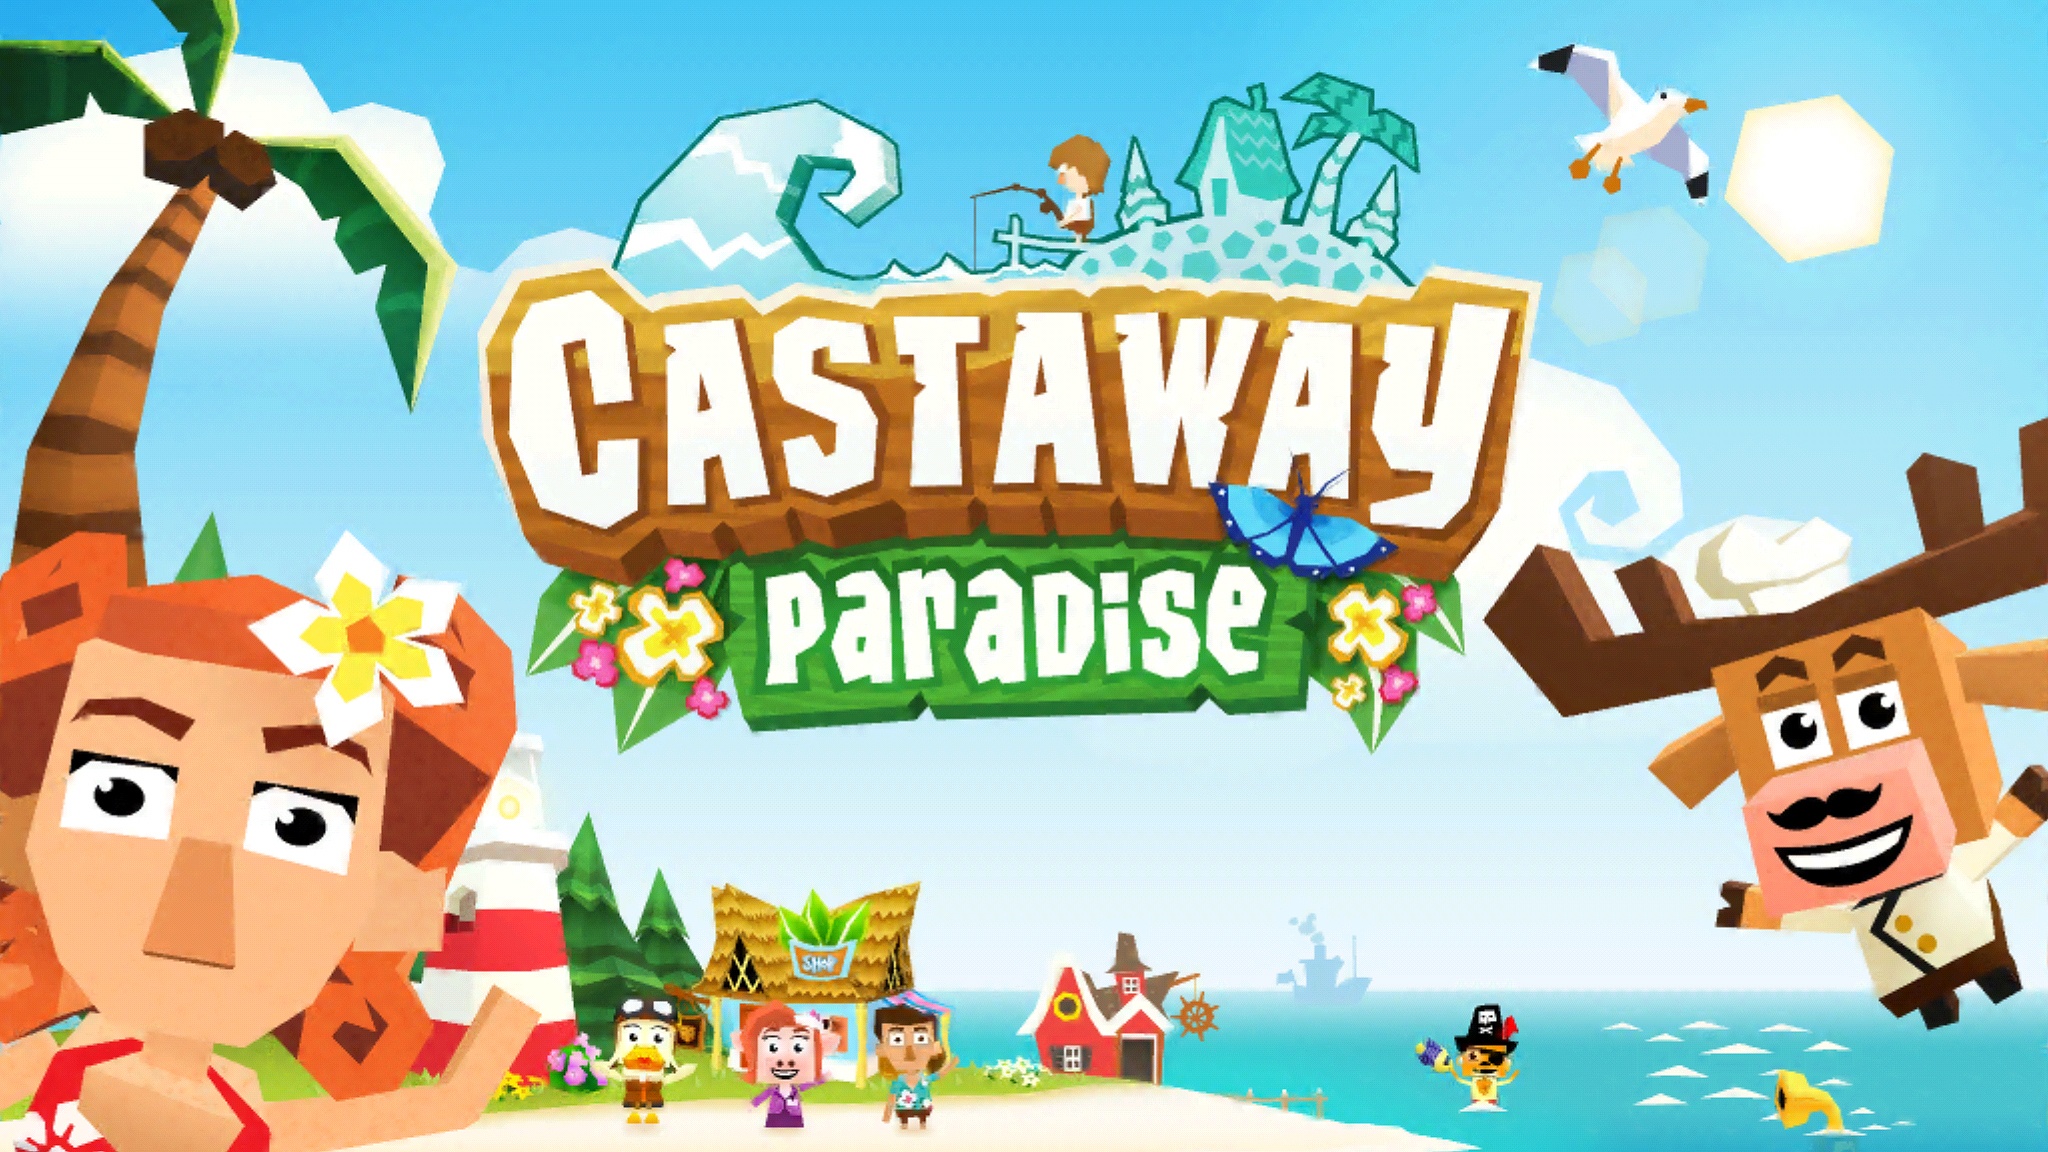 CastawayParadise_Title.jpg